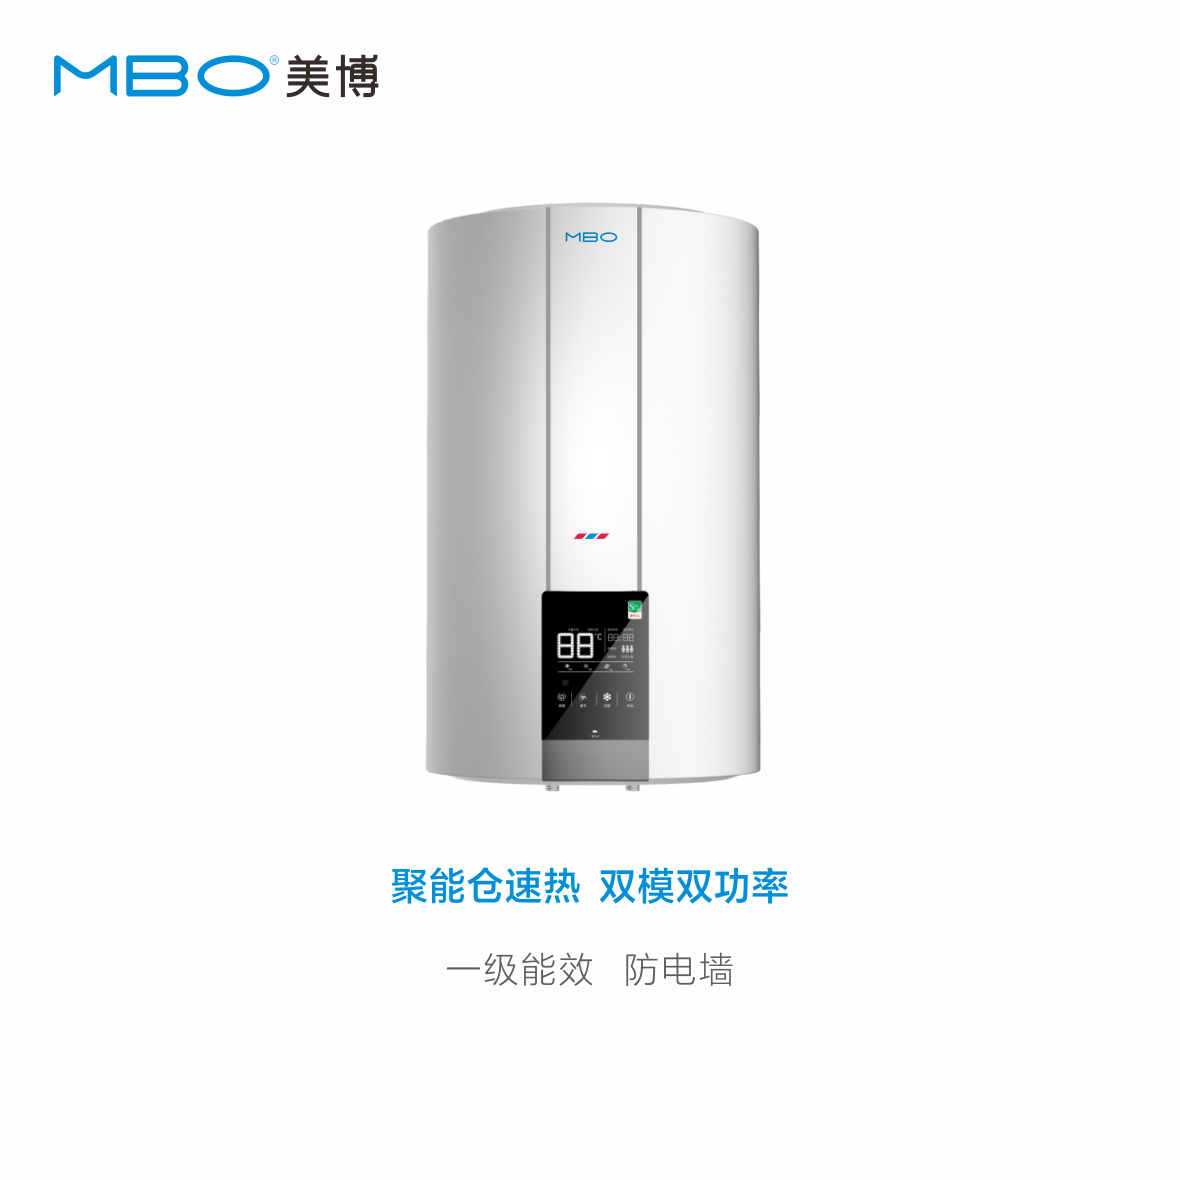 MBO热水器 立体速热系列